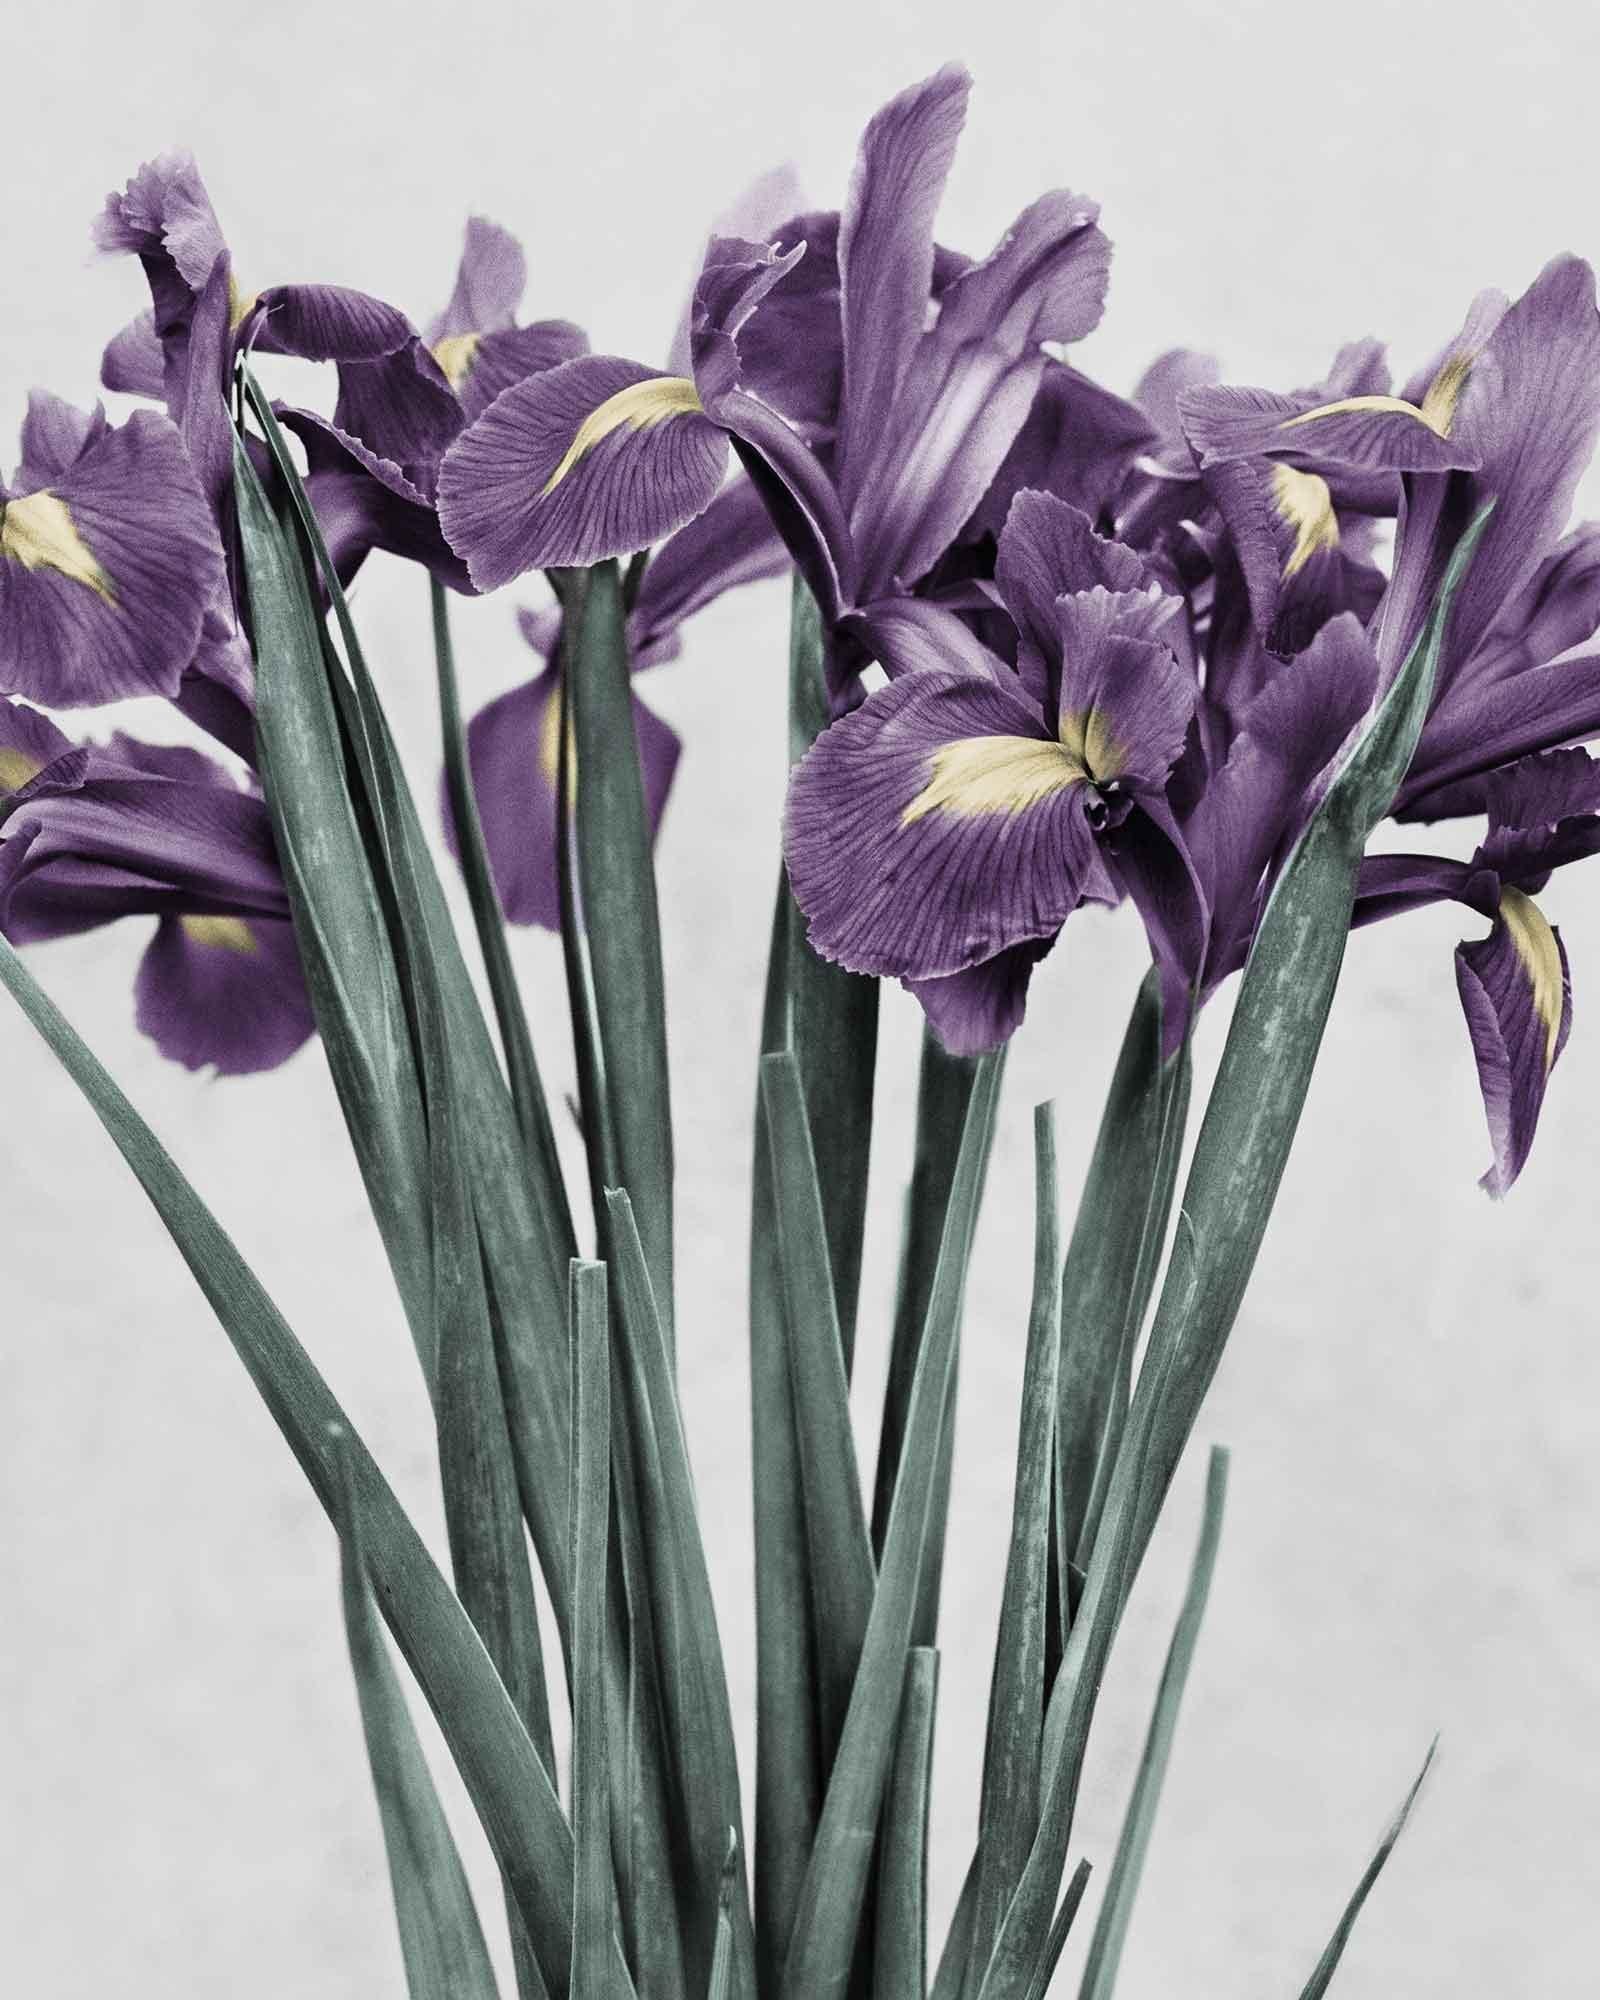 Botanica #21 (Iris Germanica) - Photograph by Vee Speers